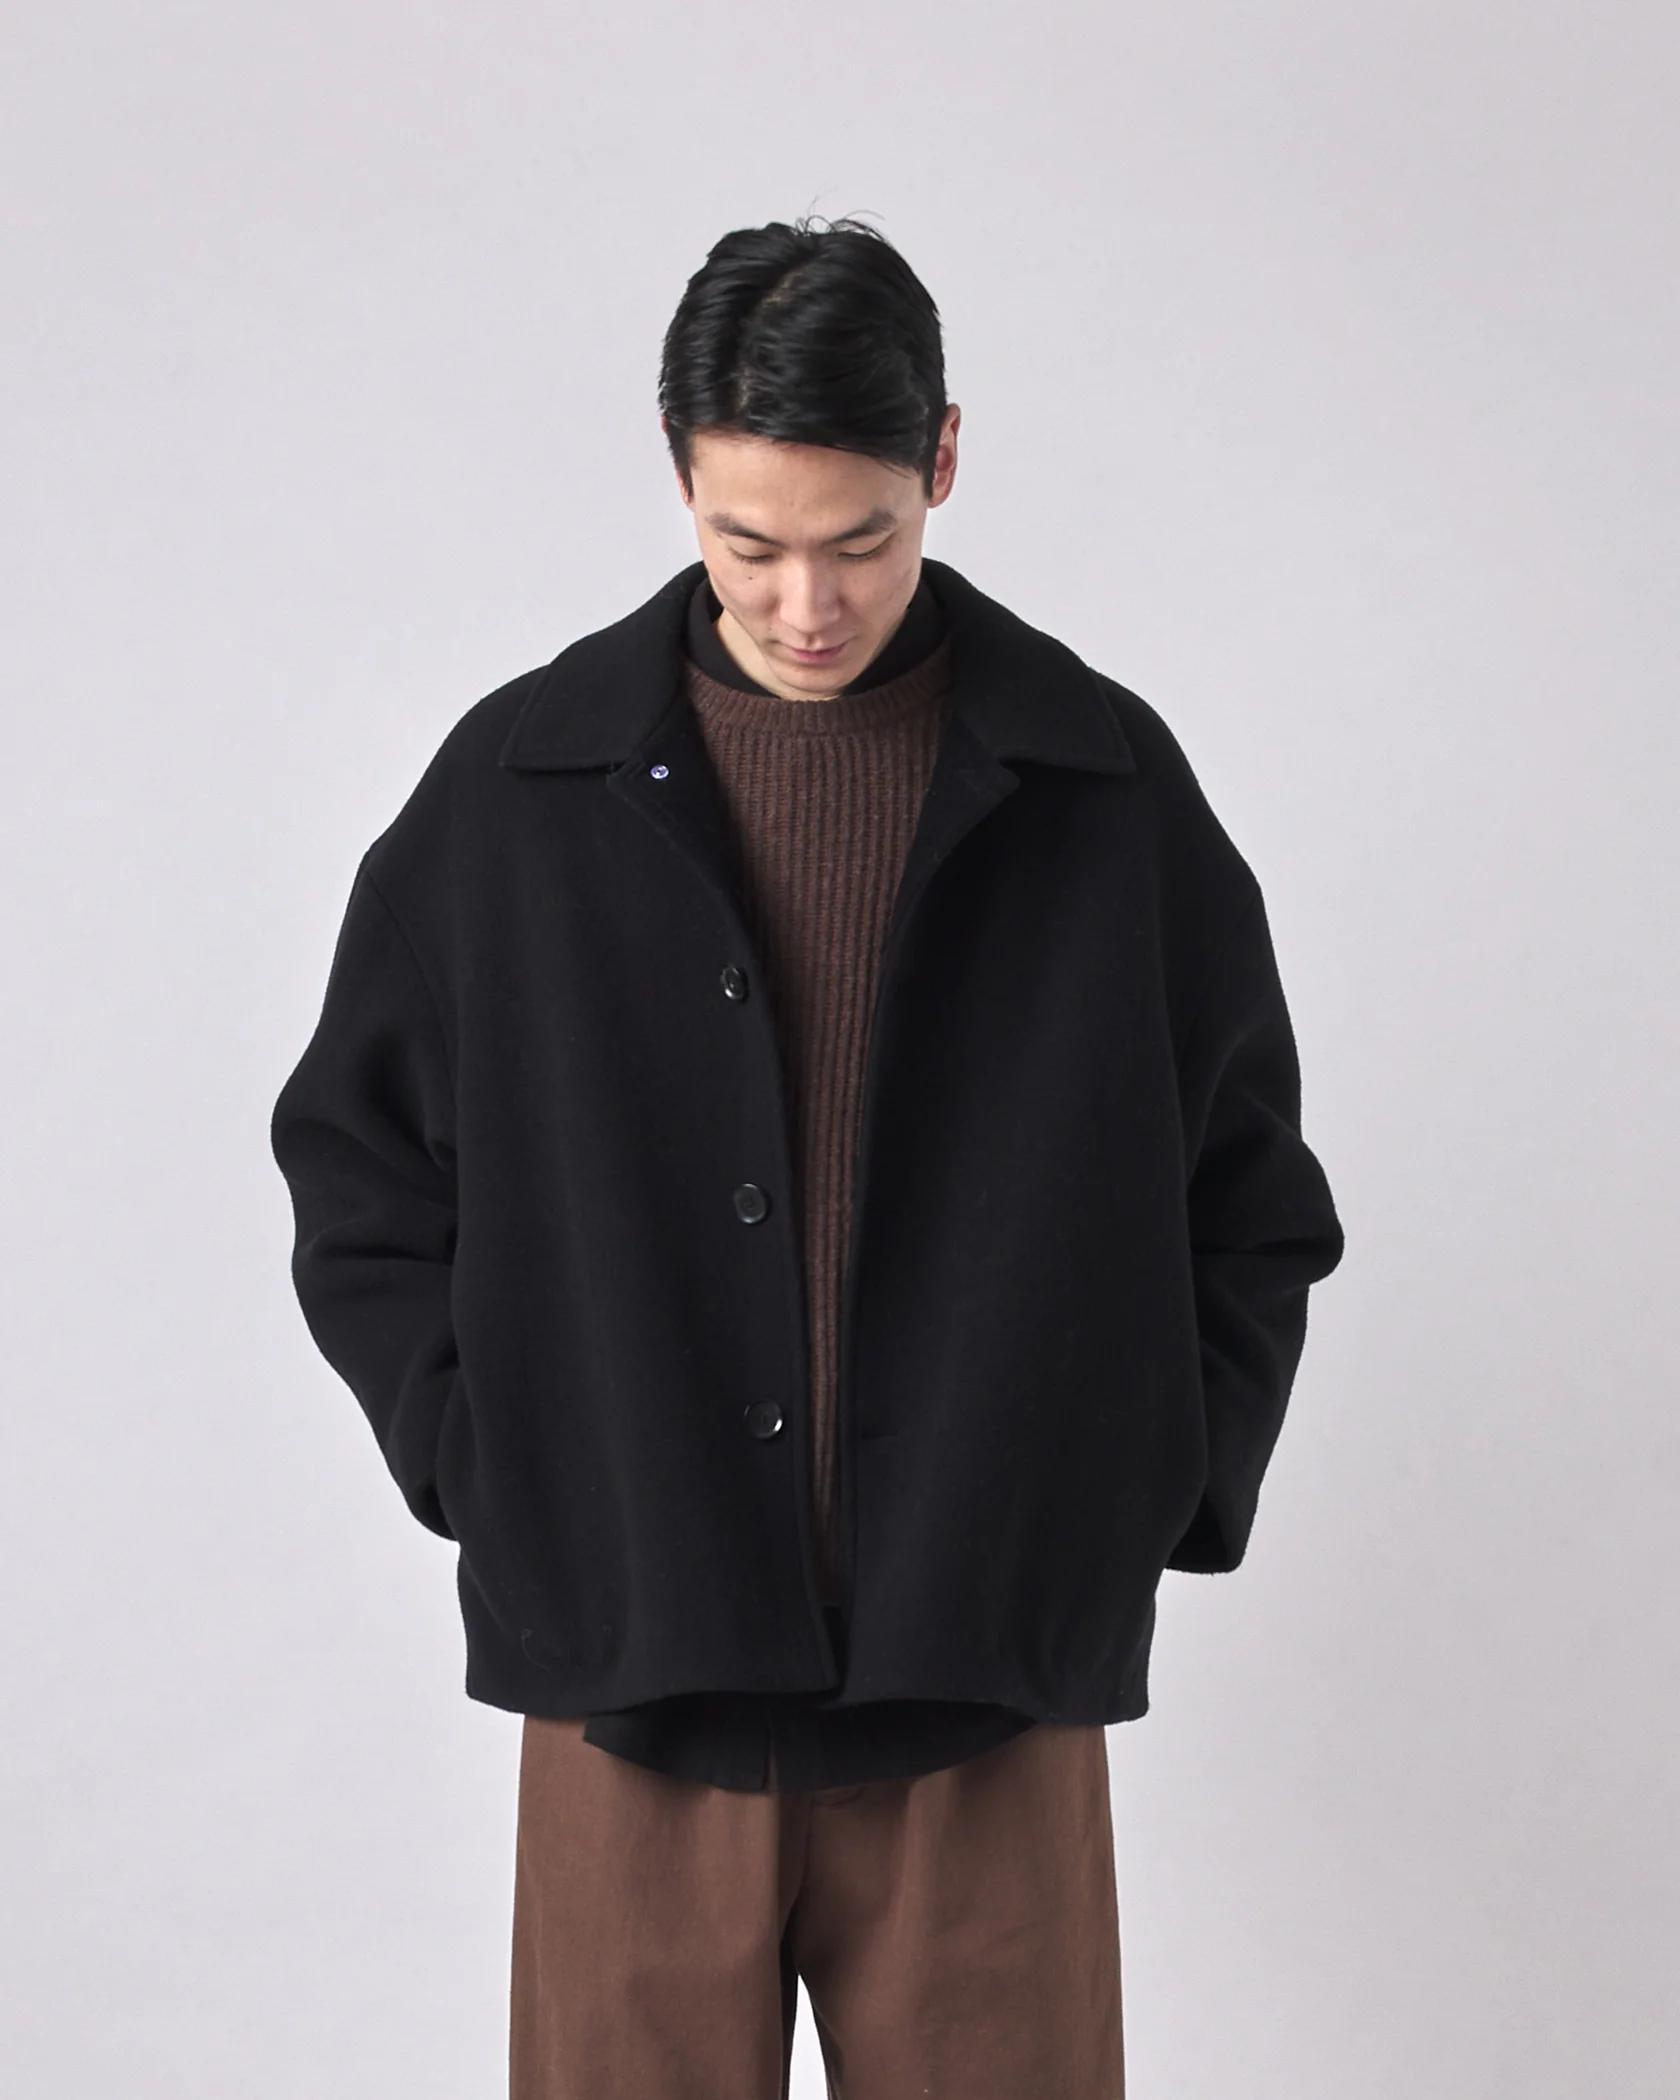 Product Image for Short Wool Coat, Black